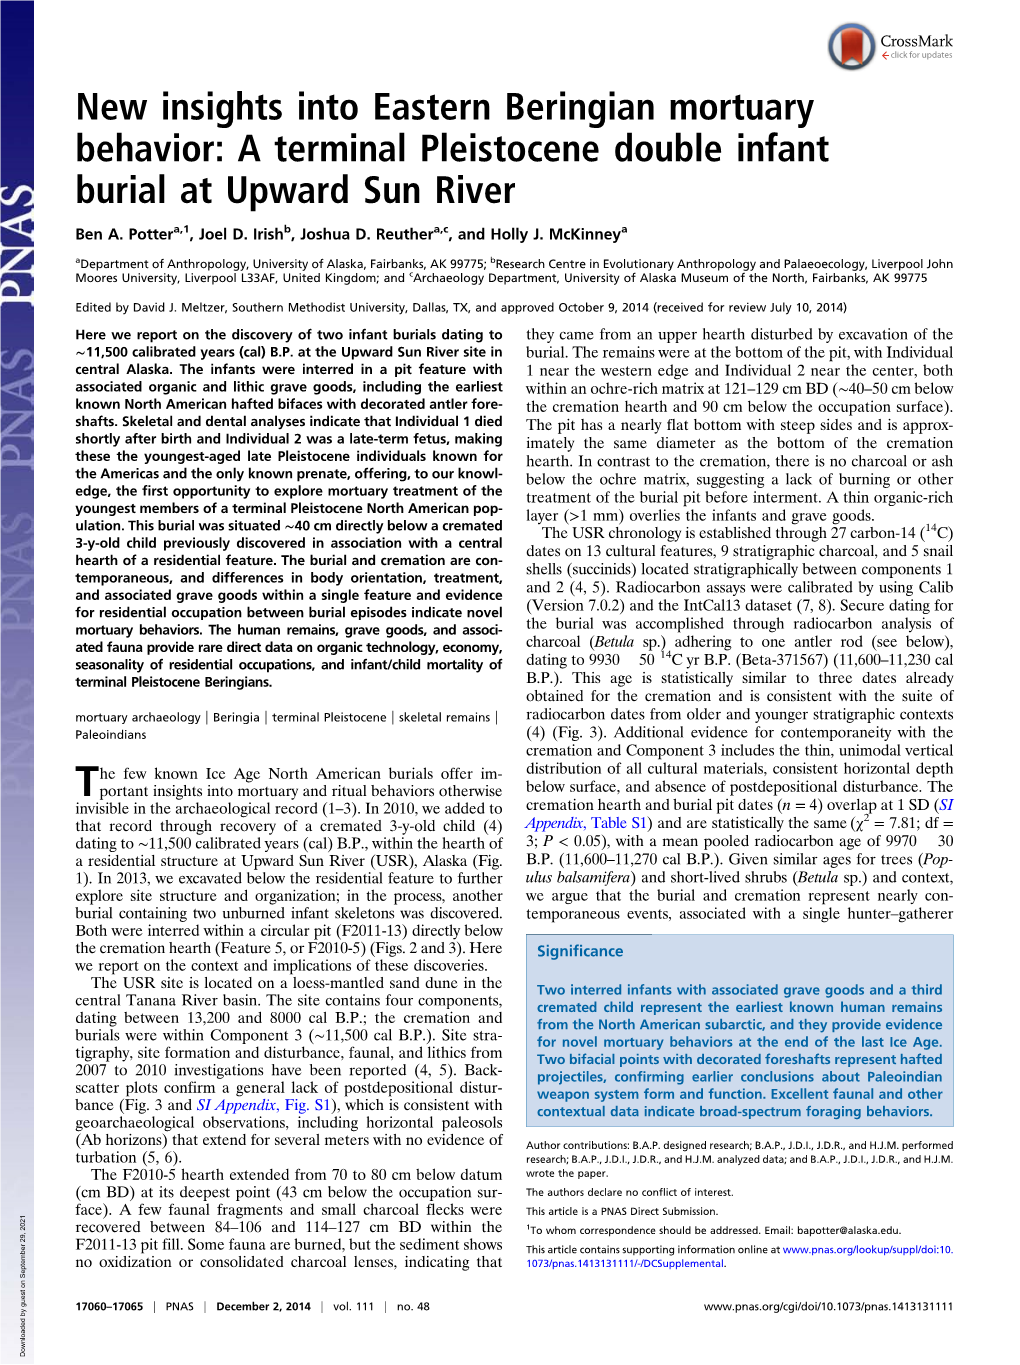 New Insights Into Eastern Beringian Mortuary Behavior: a Terminal Pleistocene Double Infant Burial at Upward Sun River